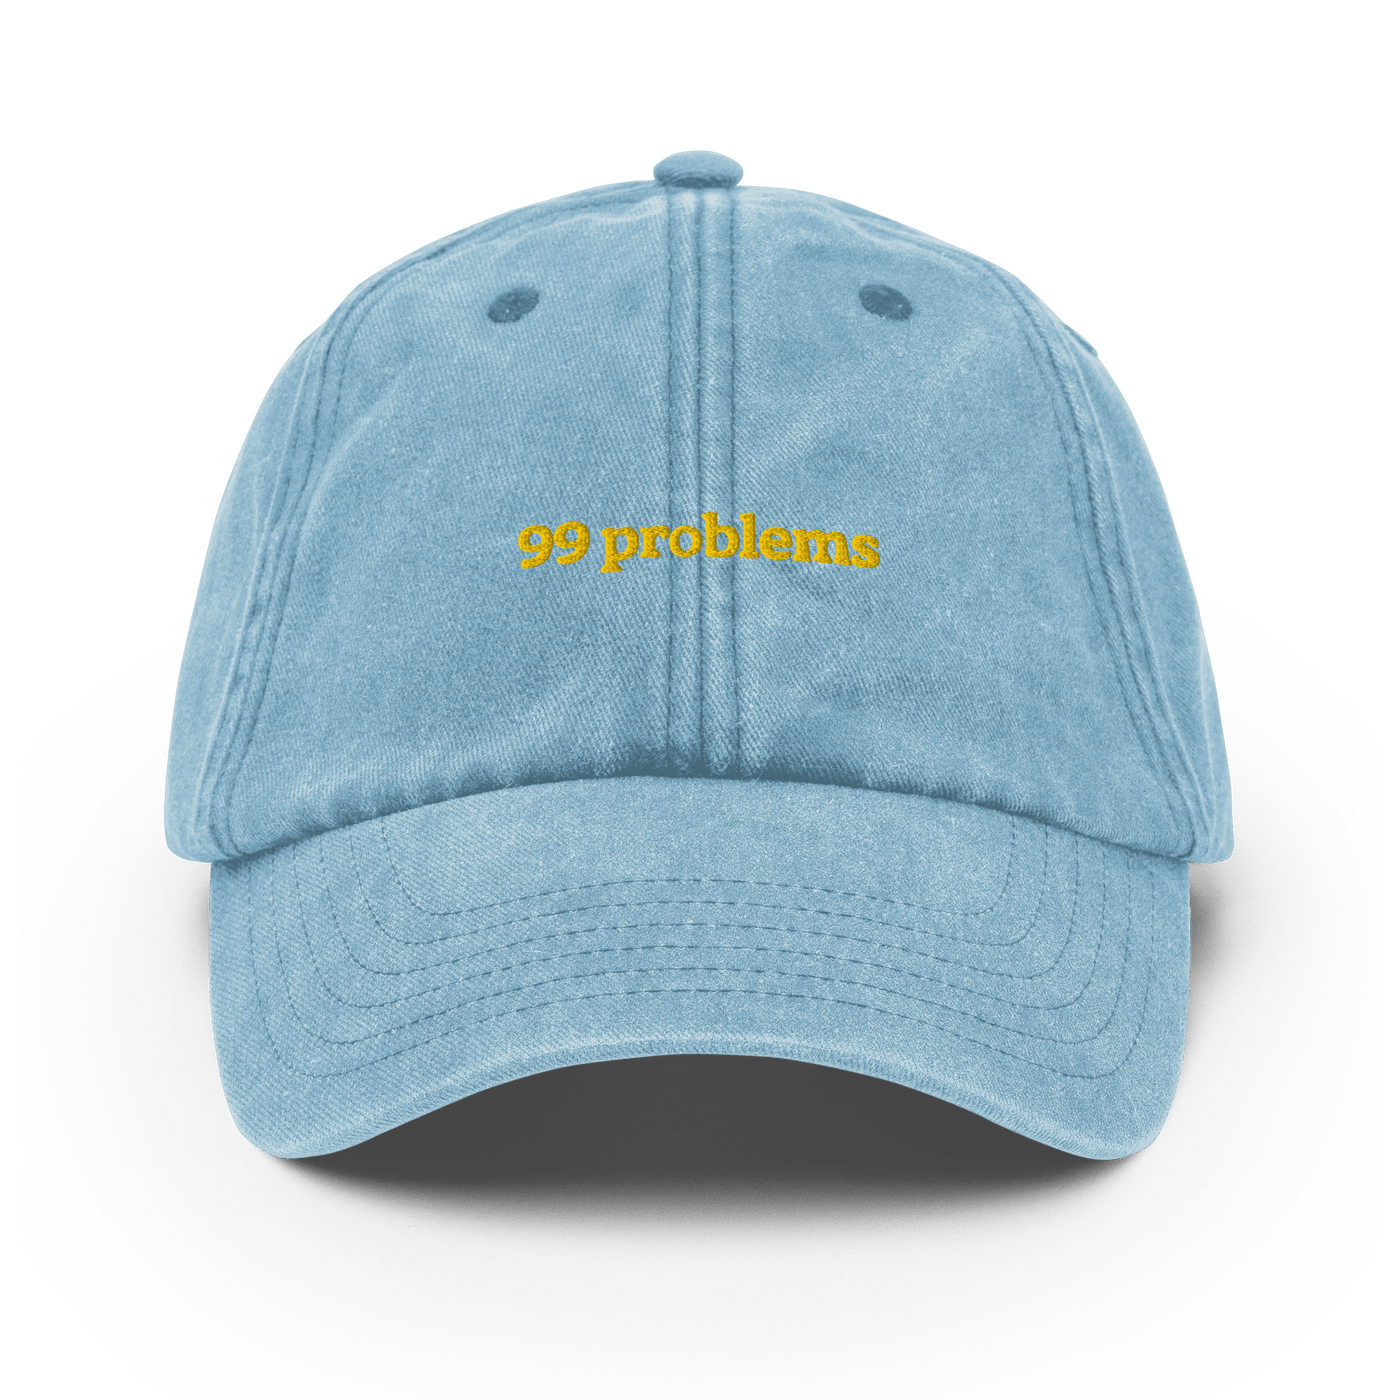 99 problems Vintage Hat - Vintage Light Denim - - Just Another Cap Store